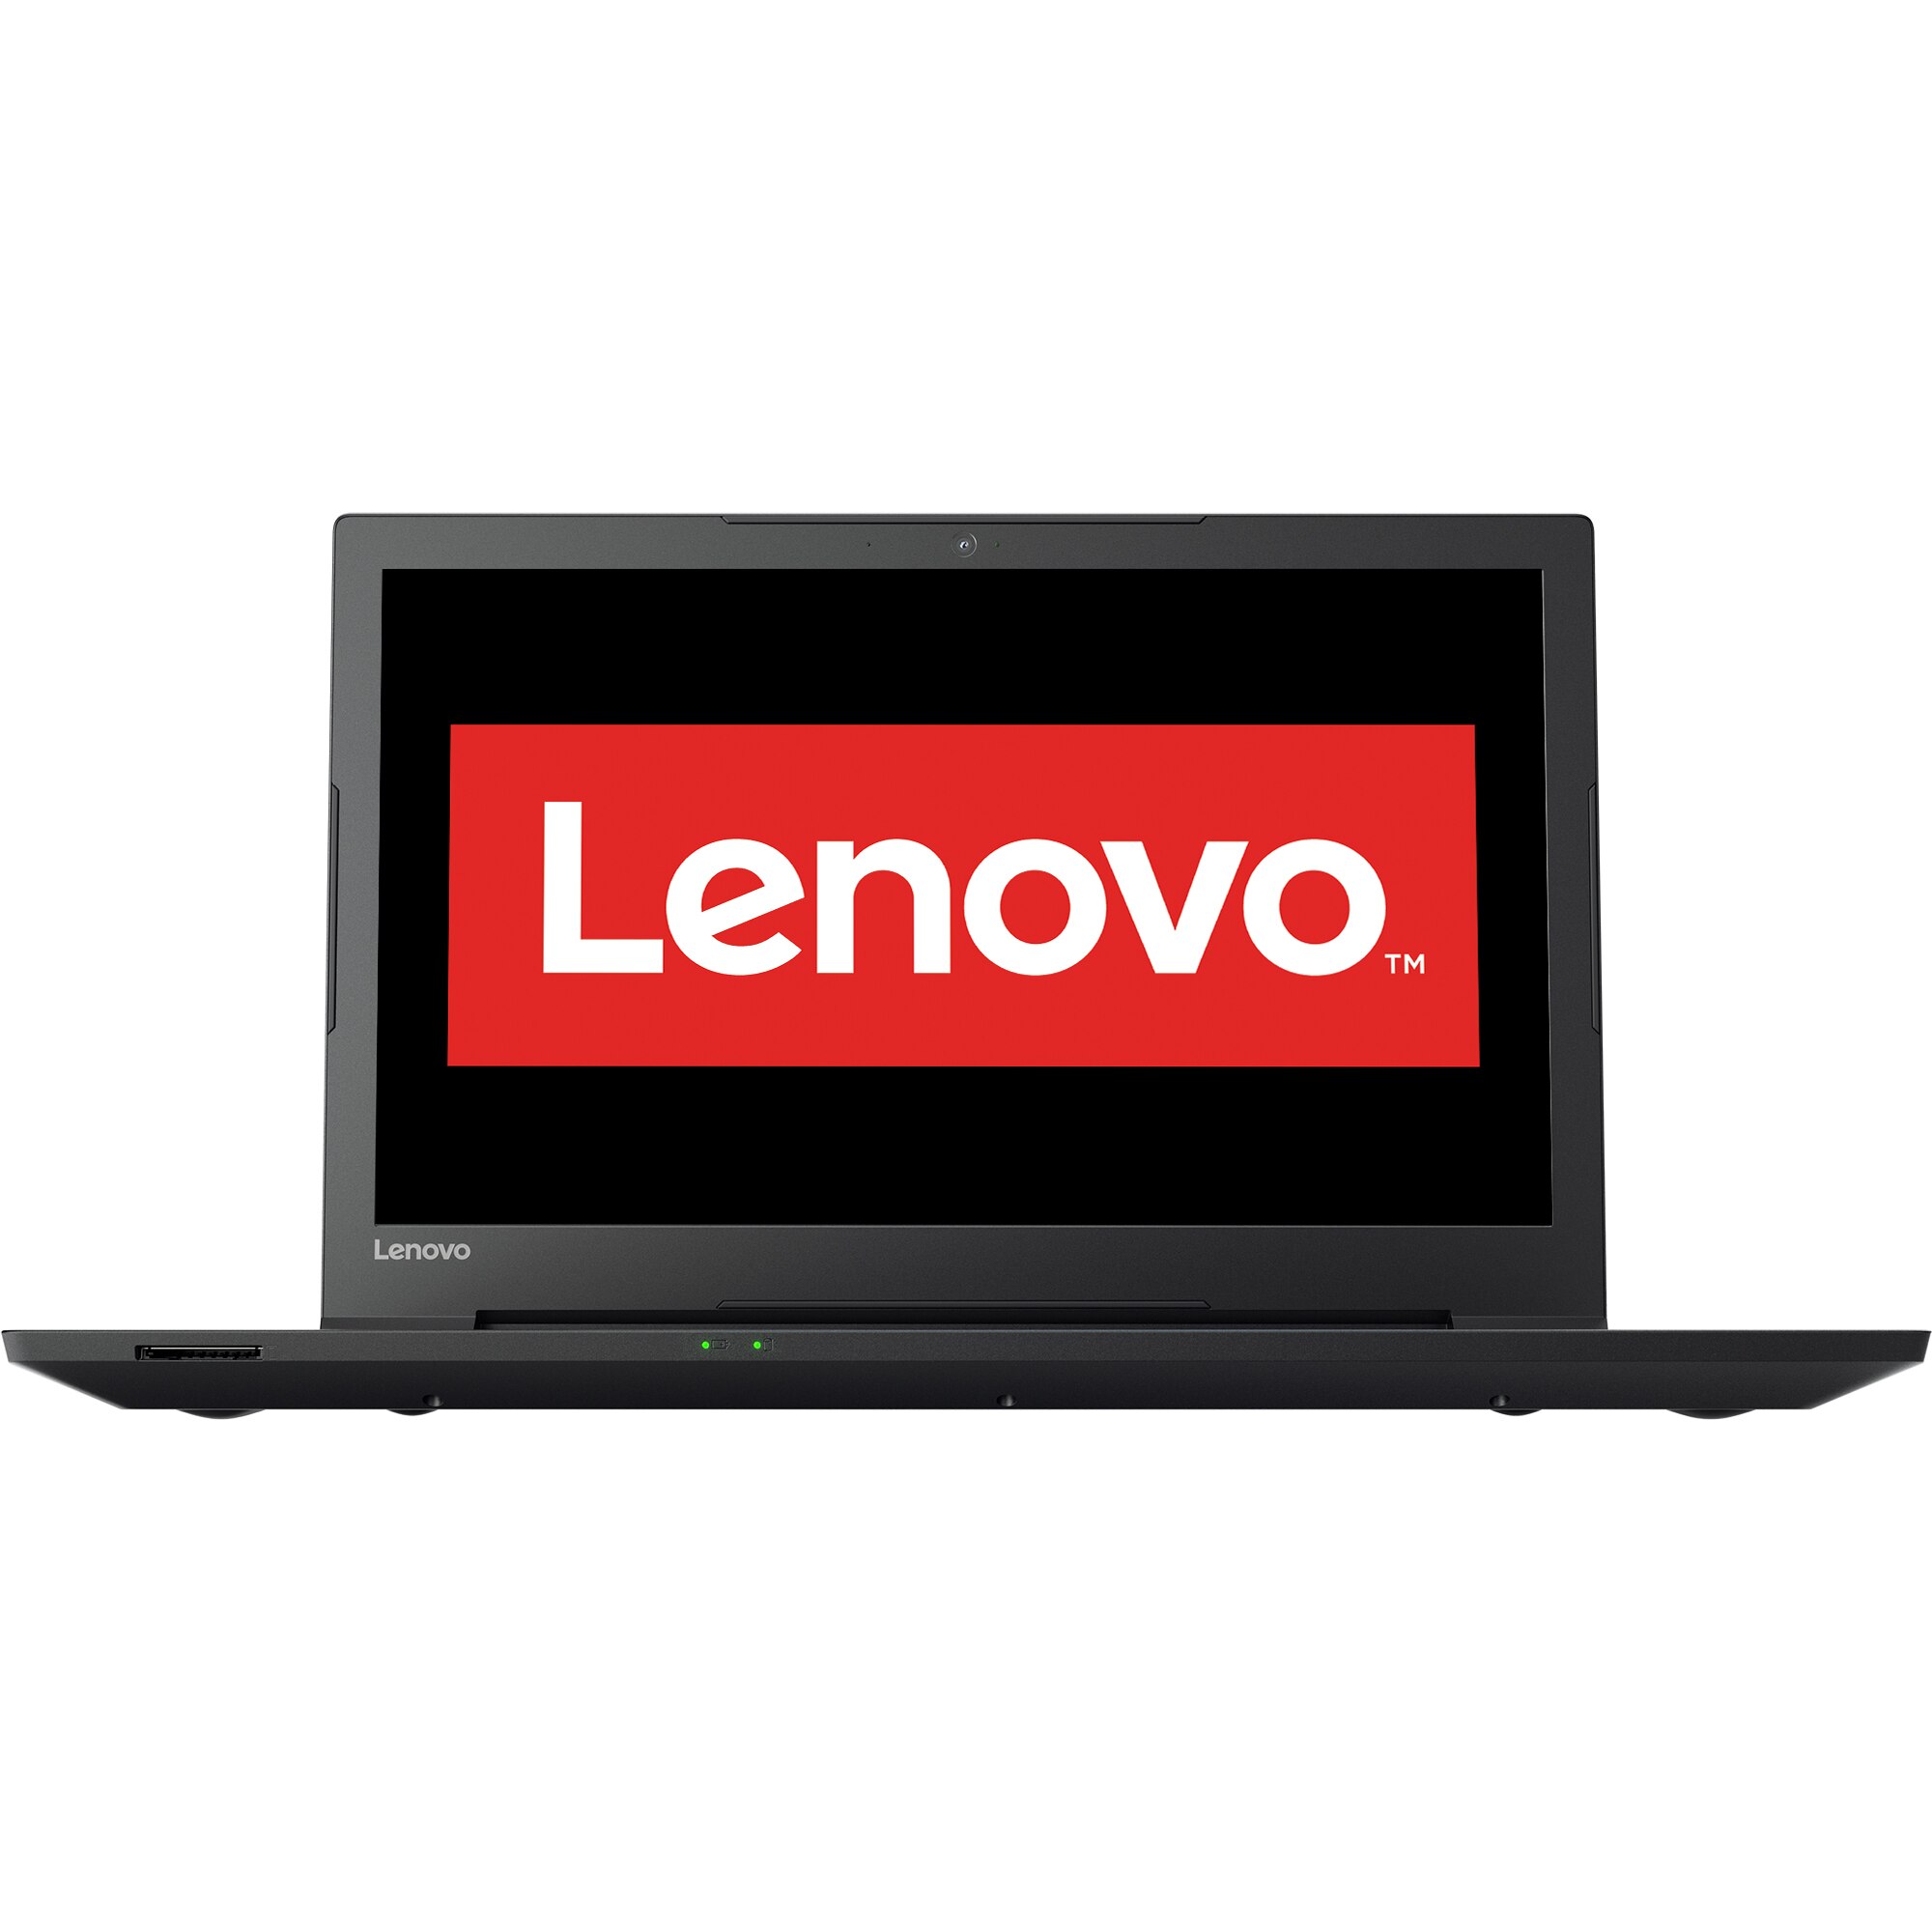 Лаптоп Lenovo V110-15ISK